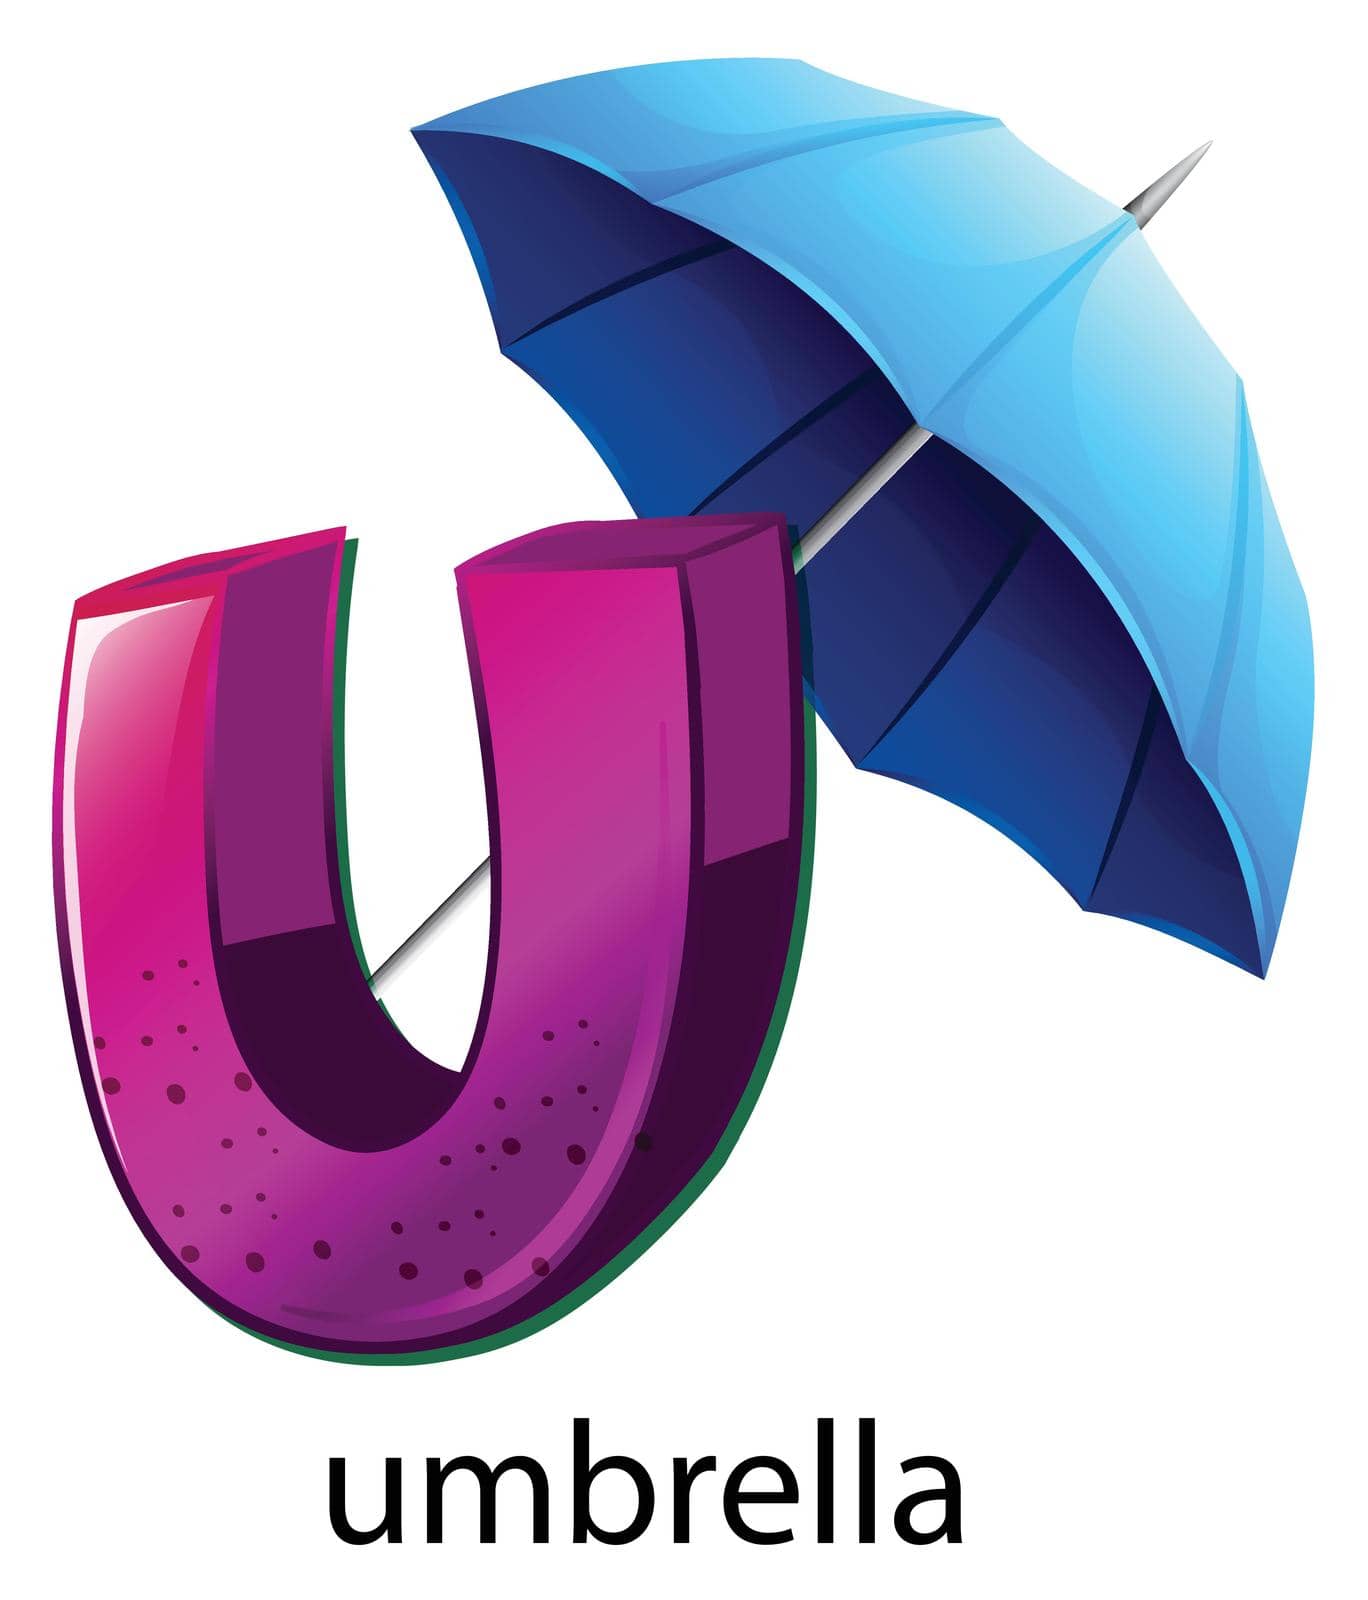 Illustration of a letter U for umbrella on a white background